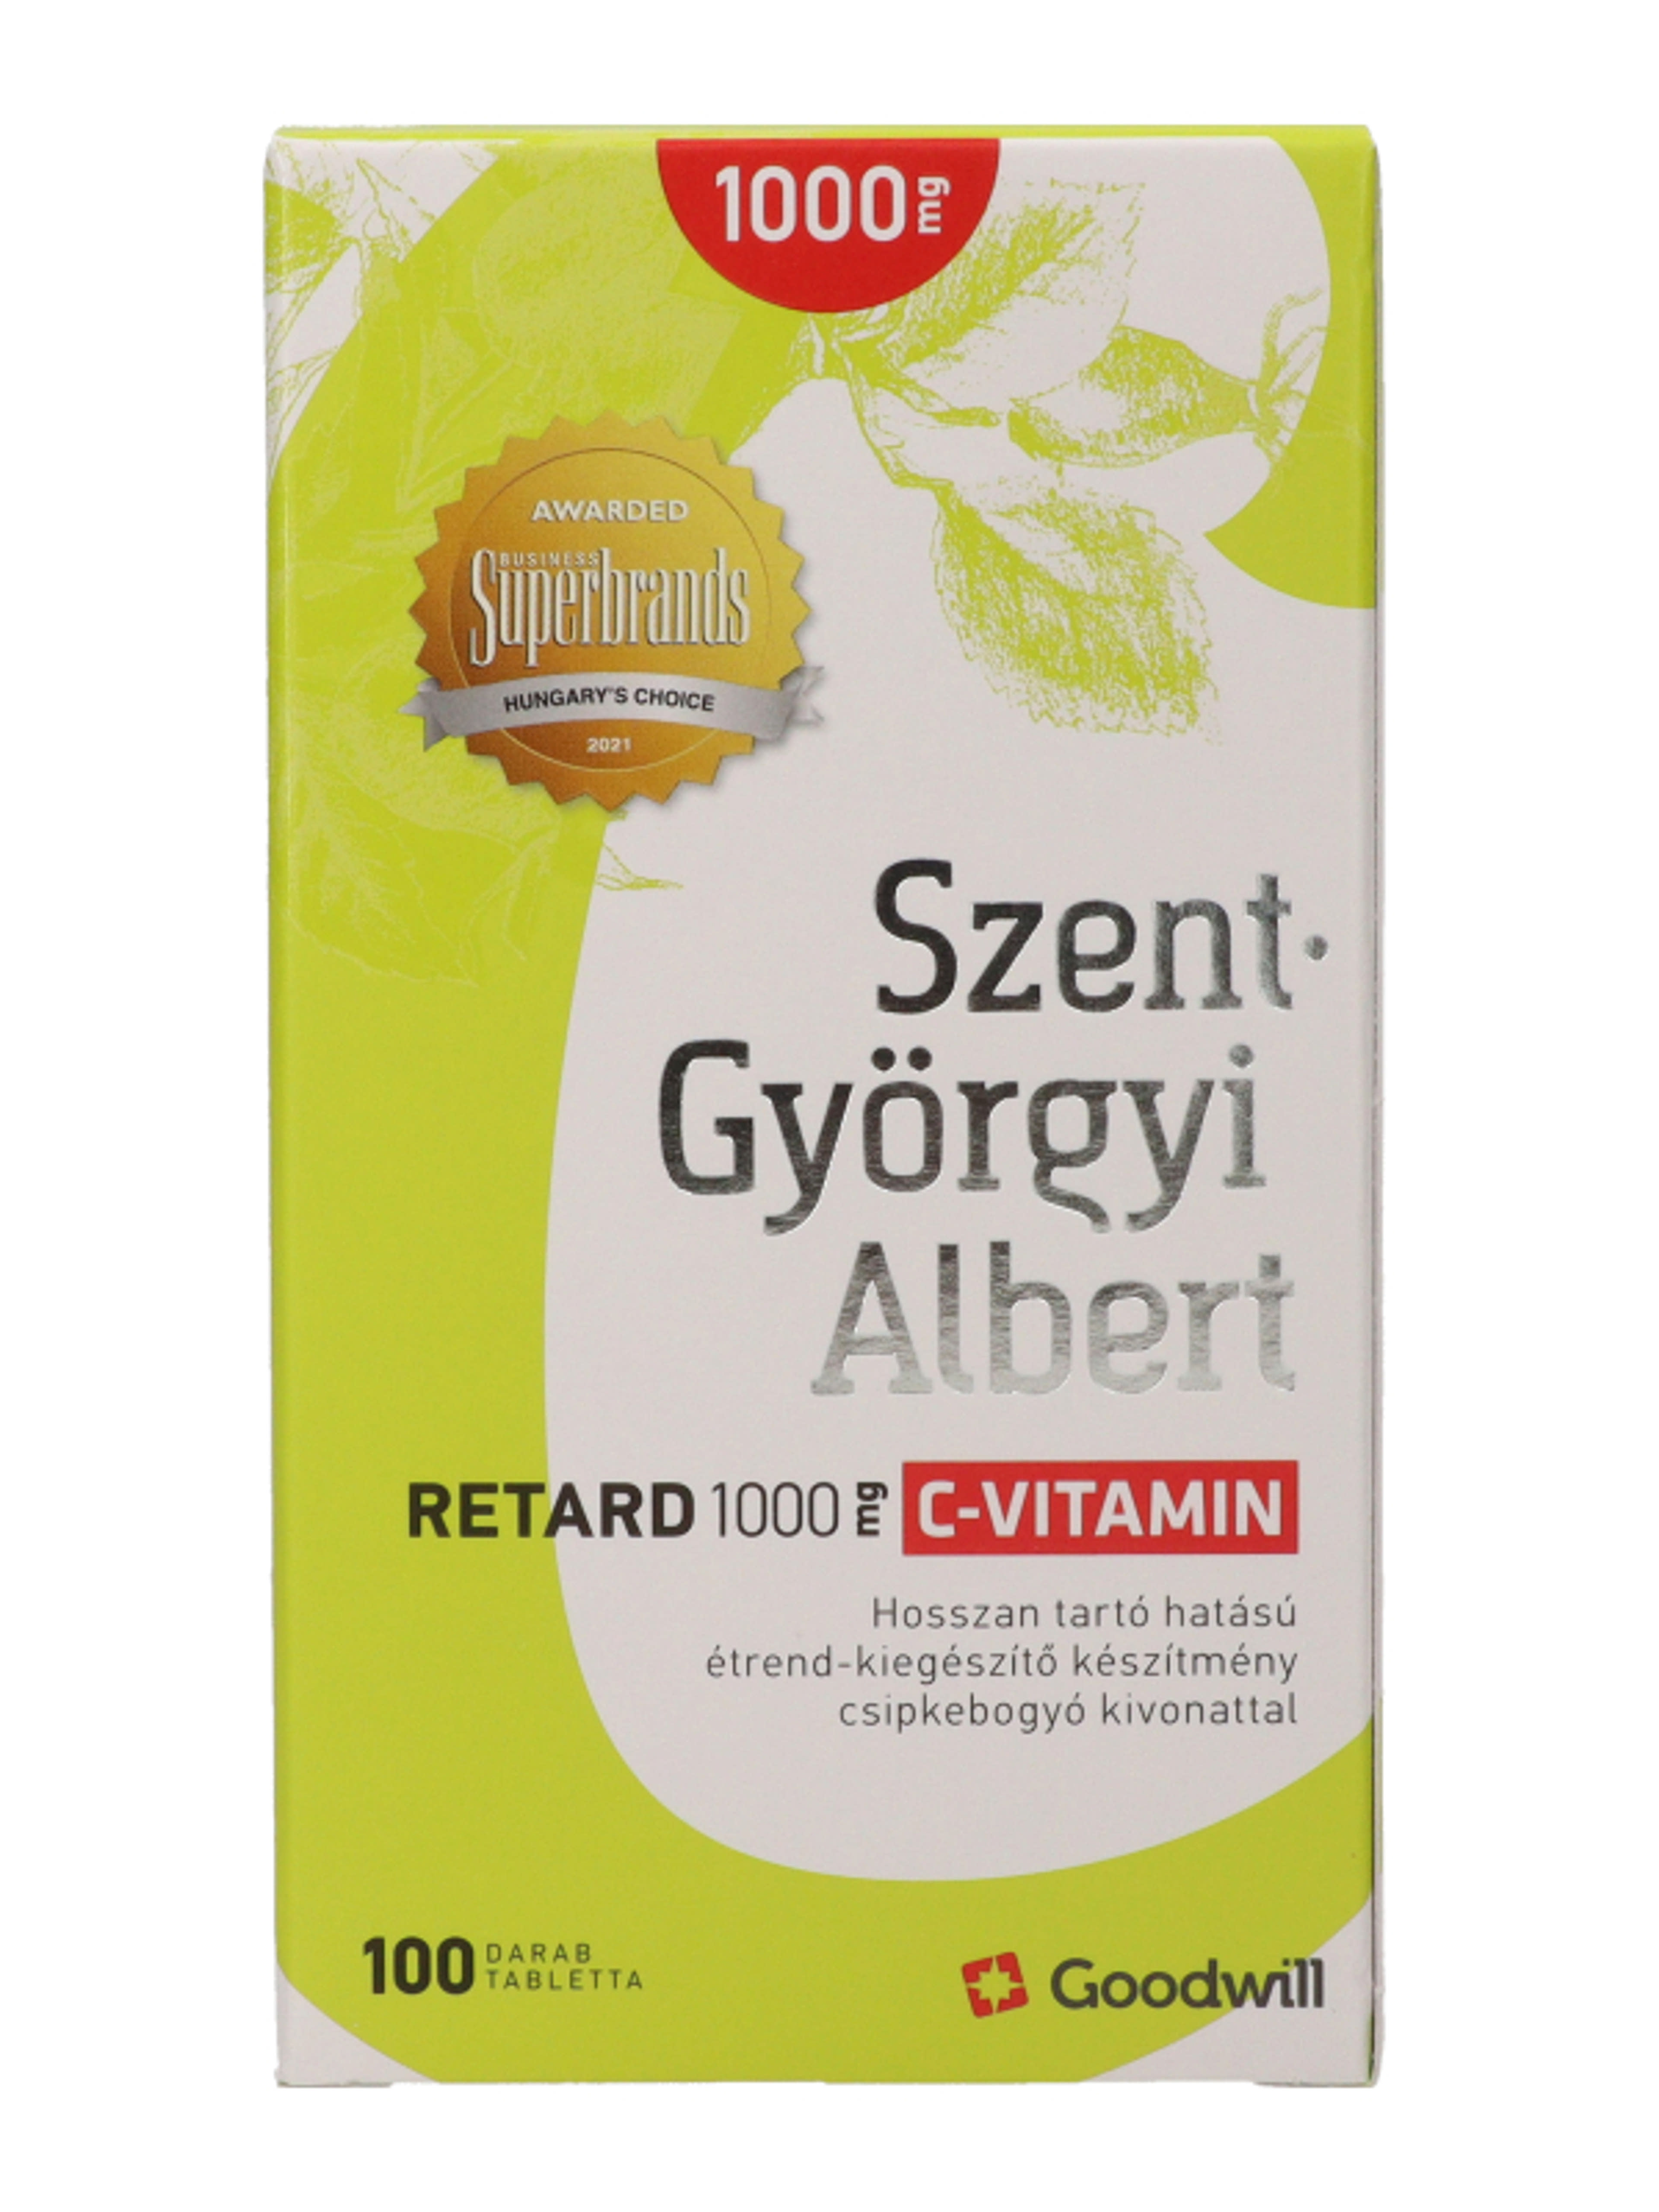 Szent-Györgyi Albert C-Vitamin Retard Tabletta - 100 db-2